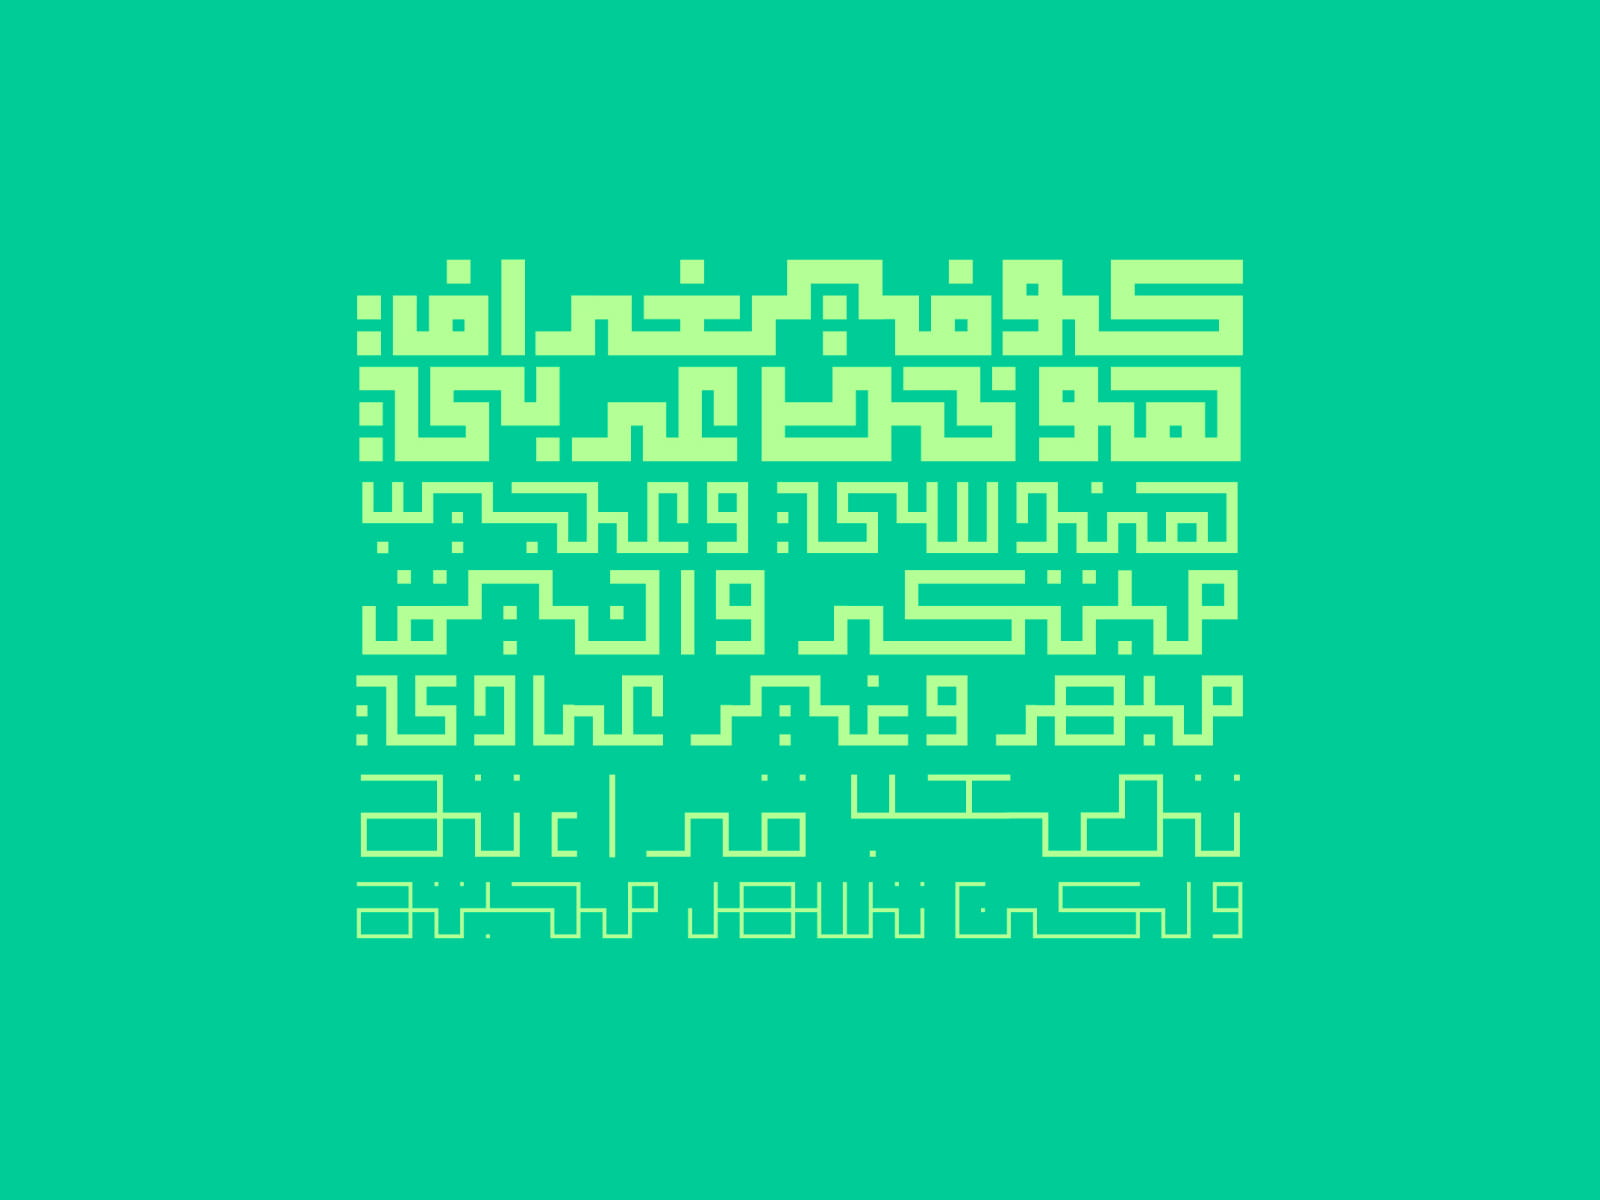 kufigraph-arabic-font-2184-08